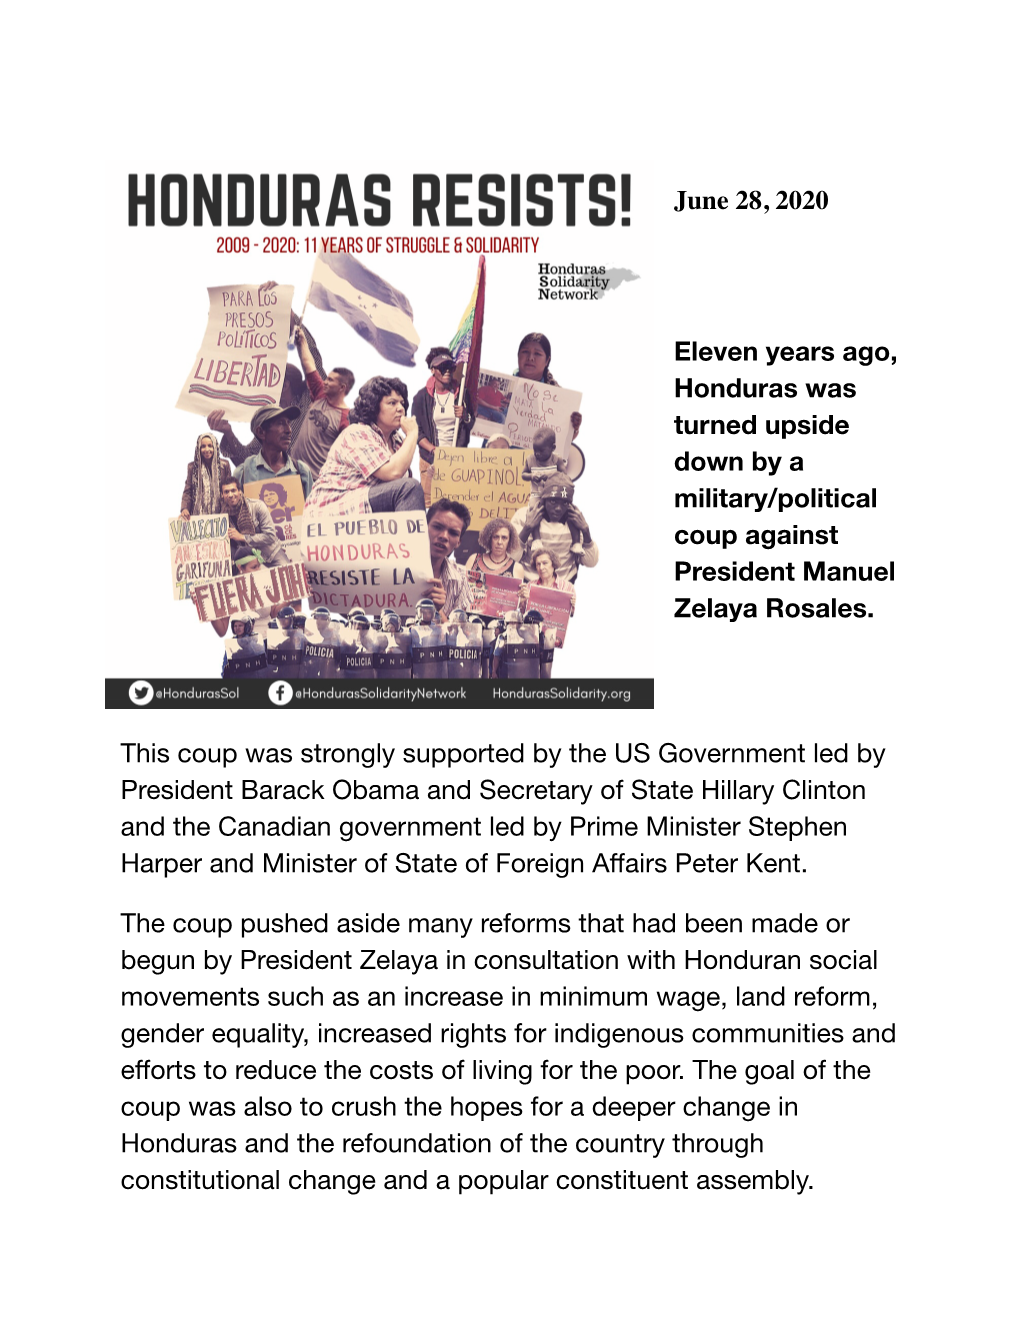 June 28, 2020 Eleven Years Ago, Honduras Was Turned Upside Down